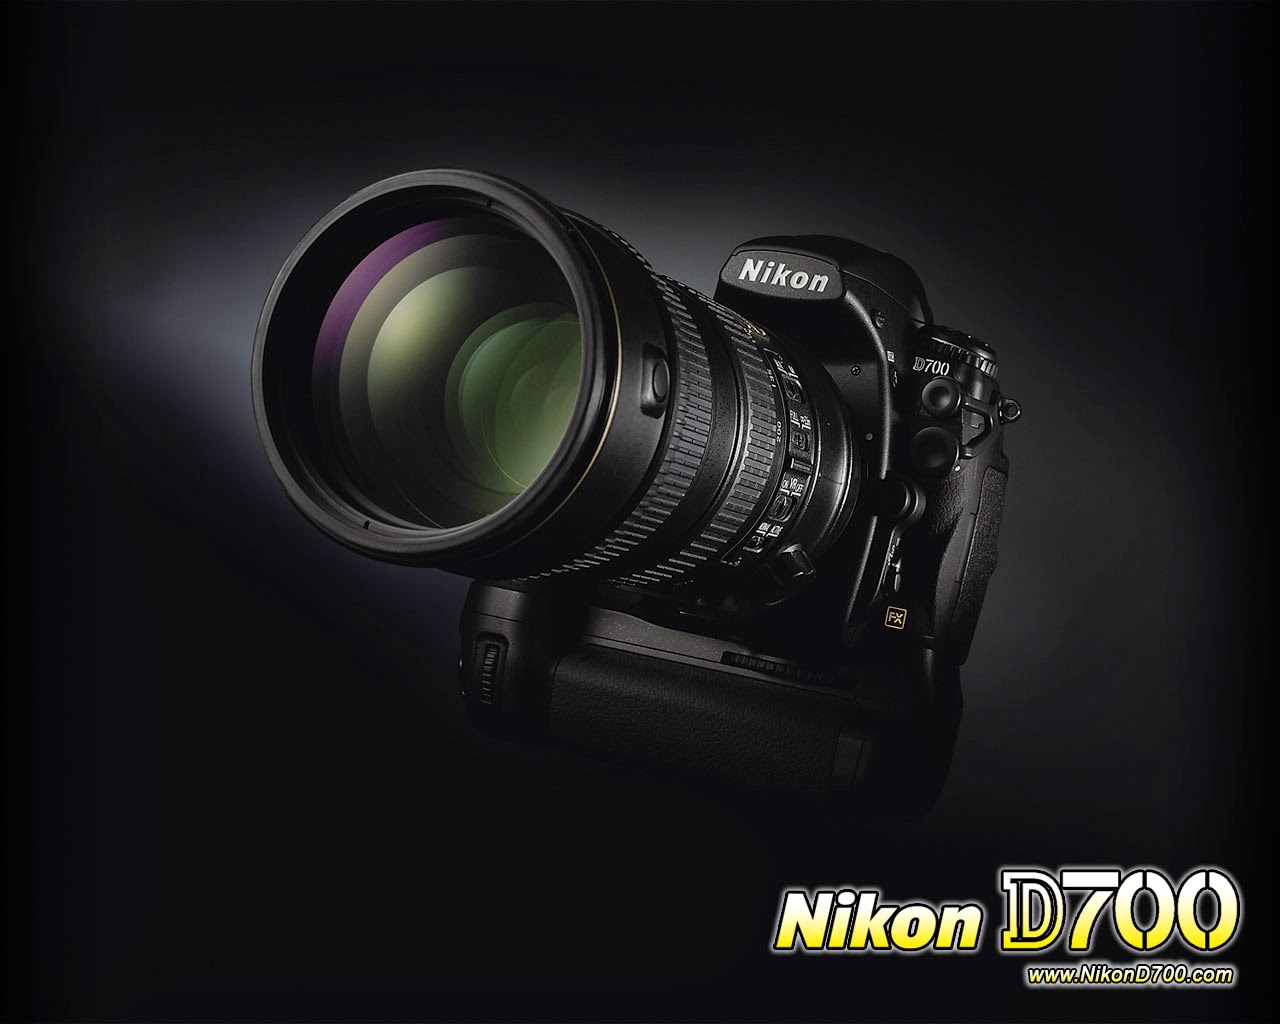 Nikon HD Wallpapers | HDWallpapers360.com - High Definition ...